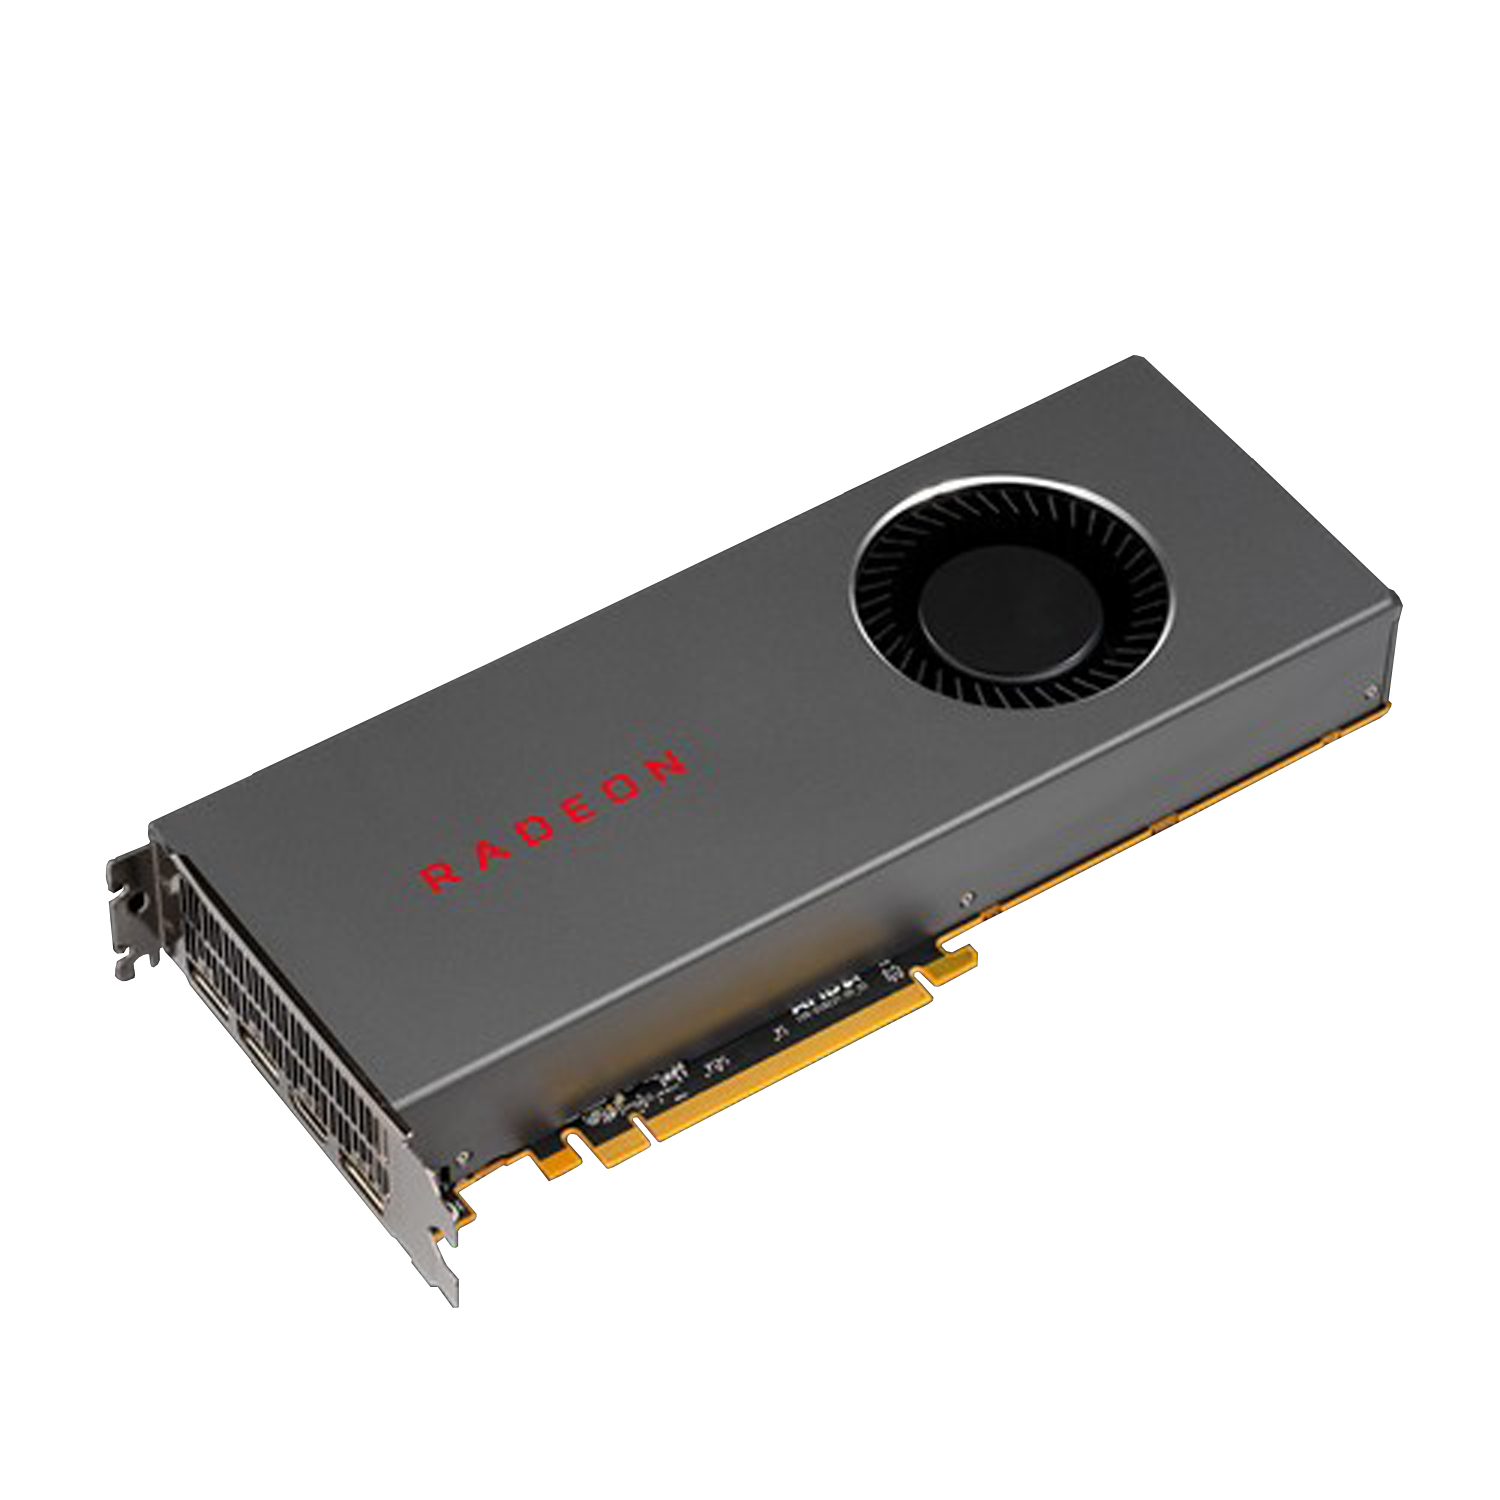 ASUS AMD Radeon RX 5700 Graphics Card, Black - image 2 of 4